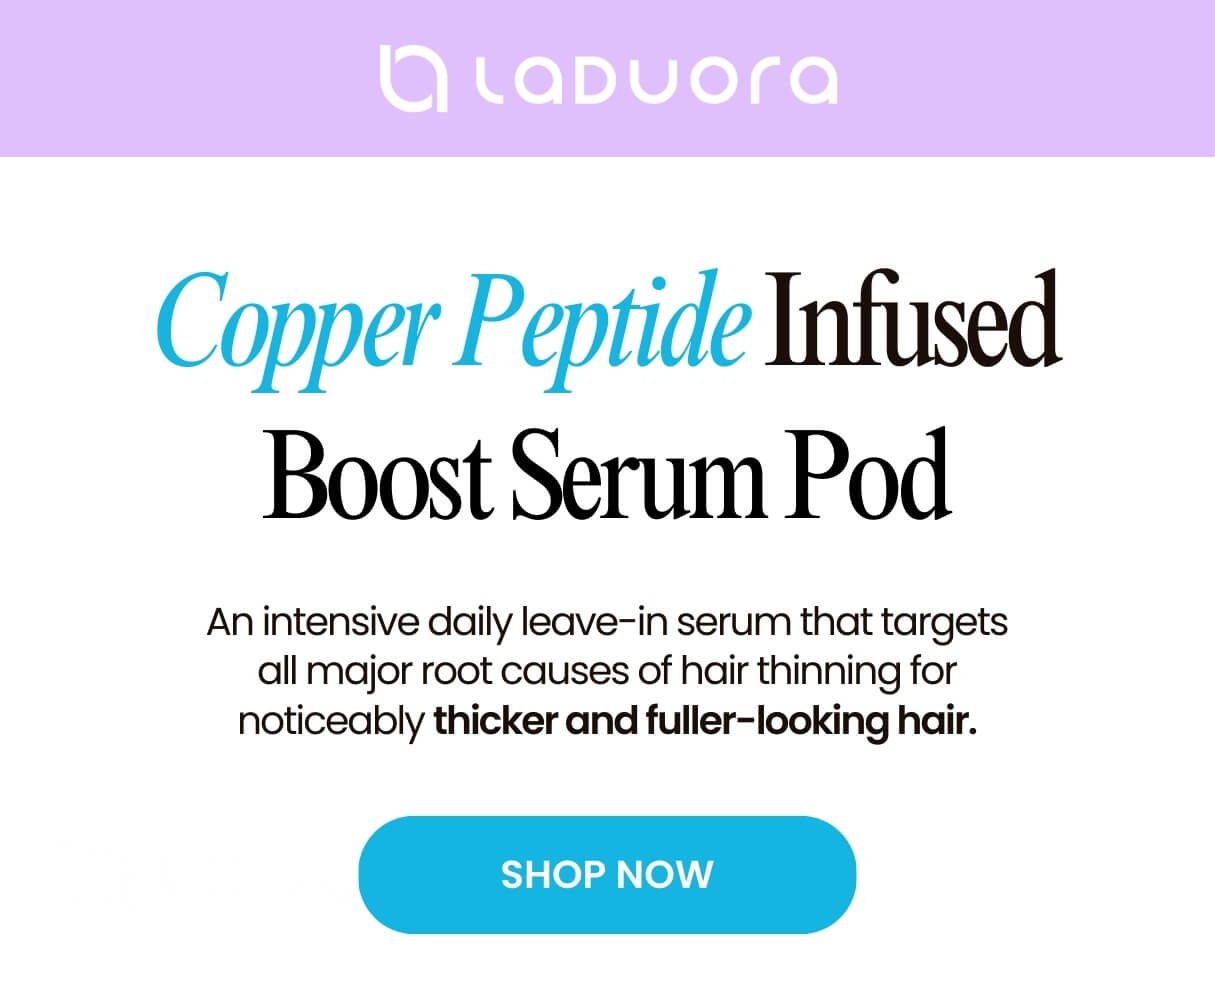 Copper Peptide Infused Boost Serum Pod